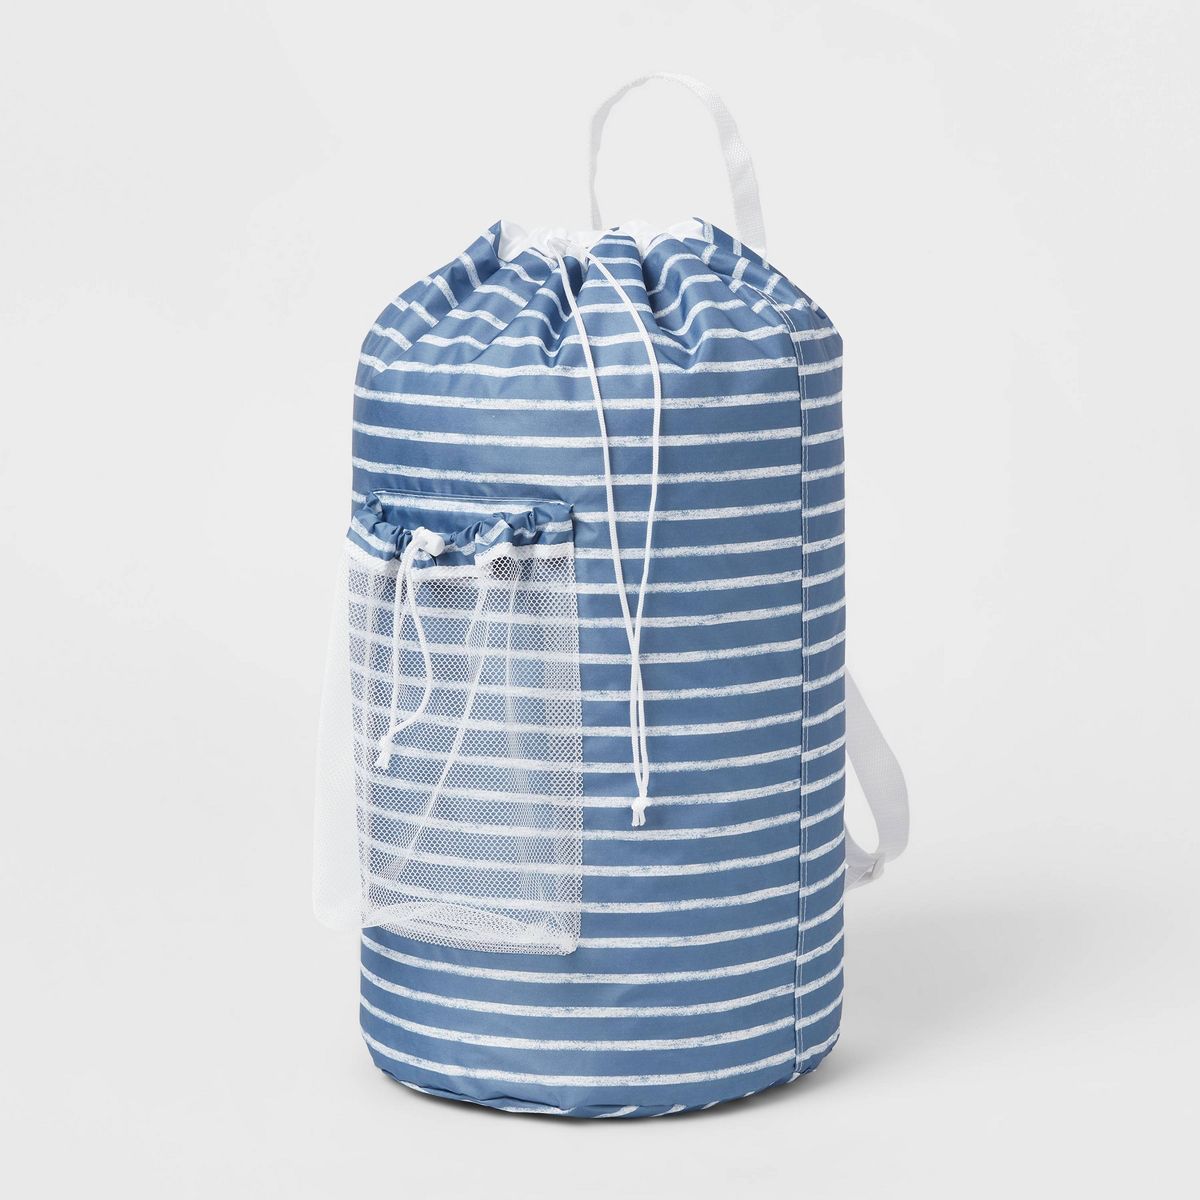 Backpack Laundry Bag Textured Striped Blue - Brightroom™ | Target